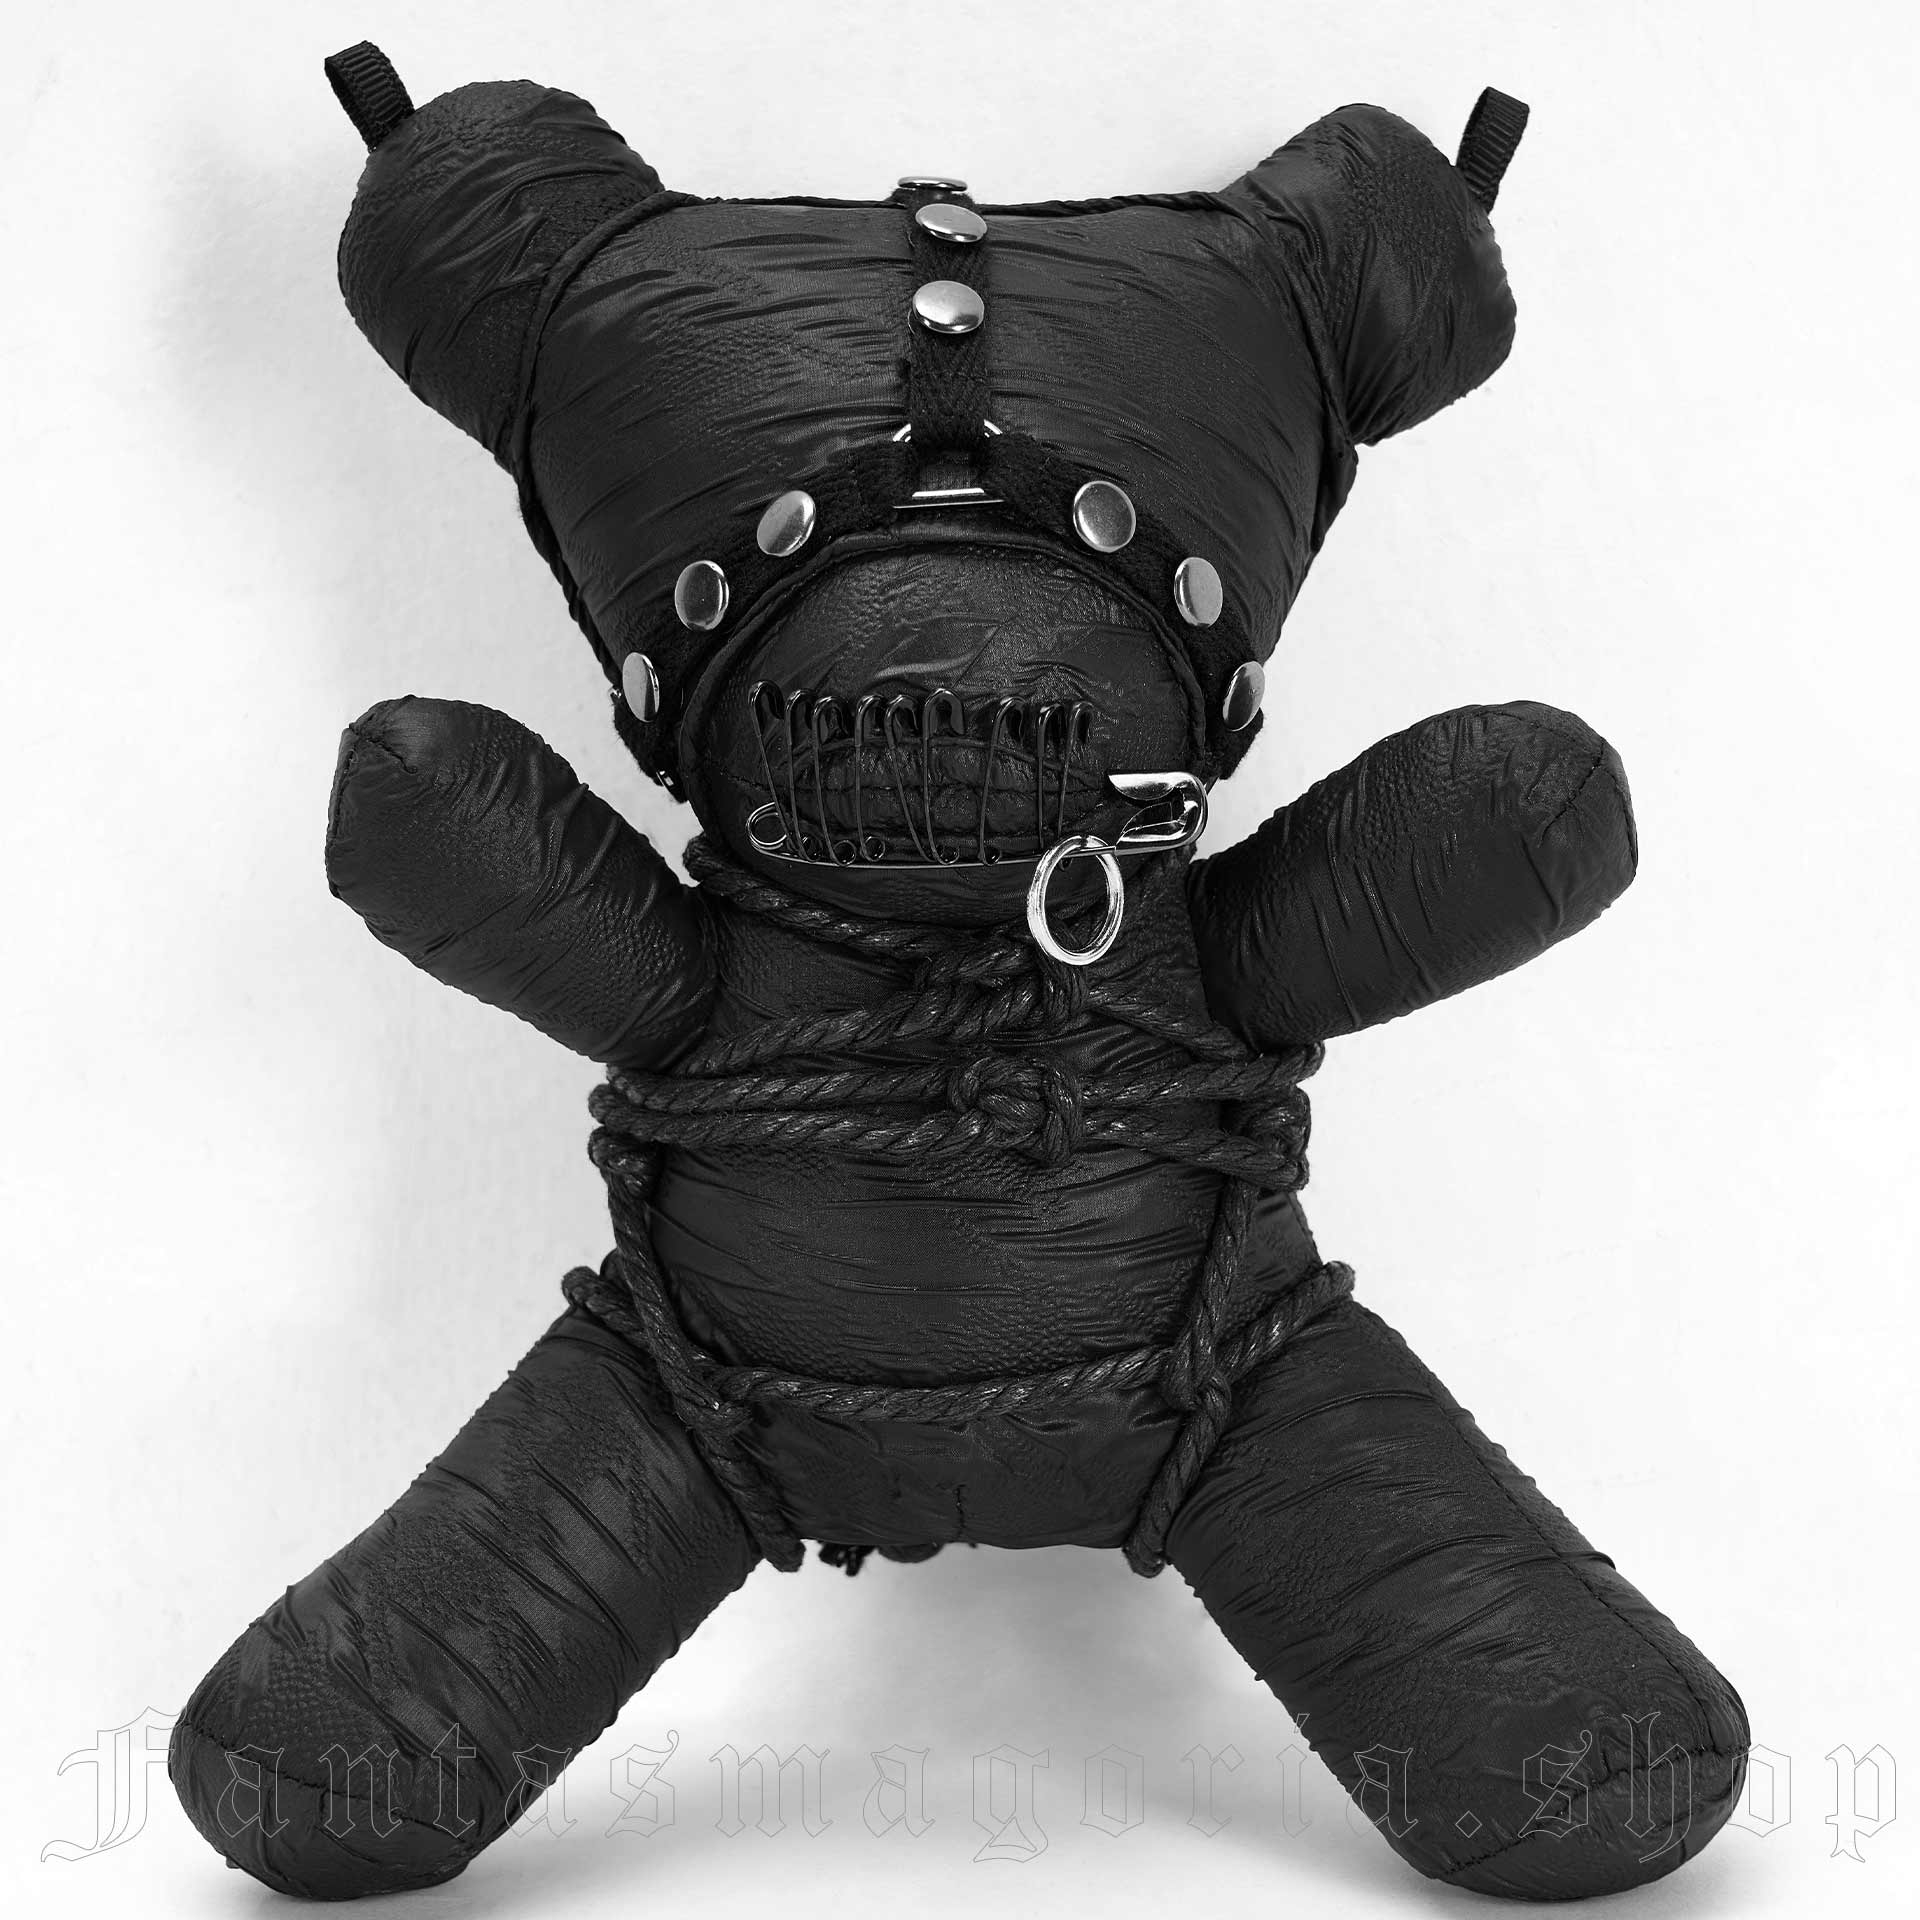 Goth Pastel Teddy Bear Gothic Kawaii Voodoo Plush Toy Sticker for